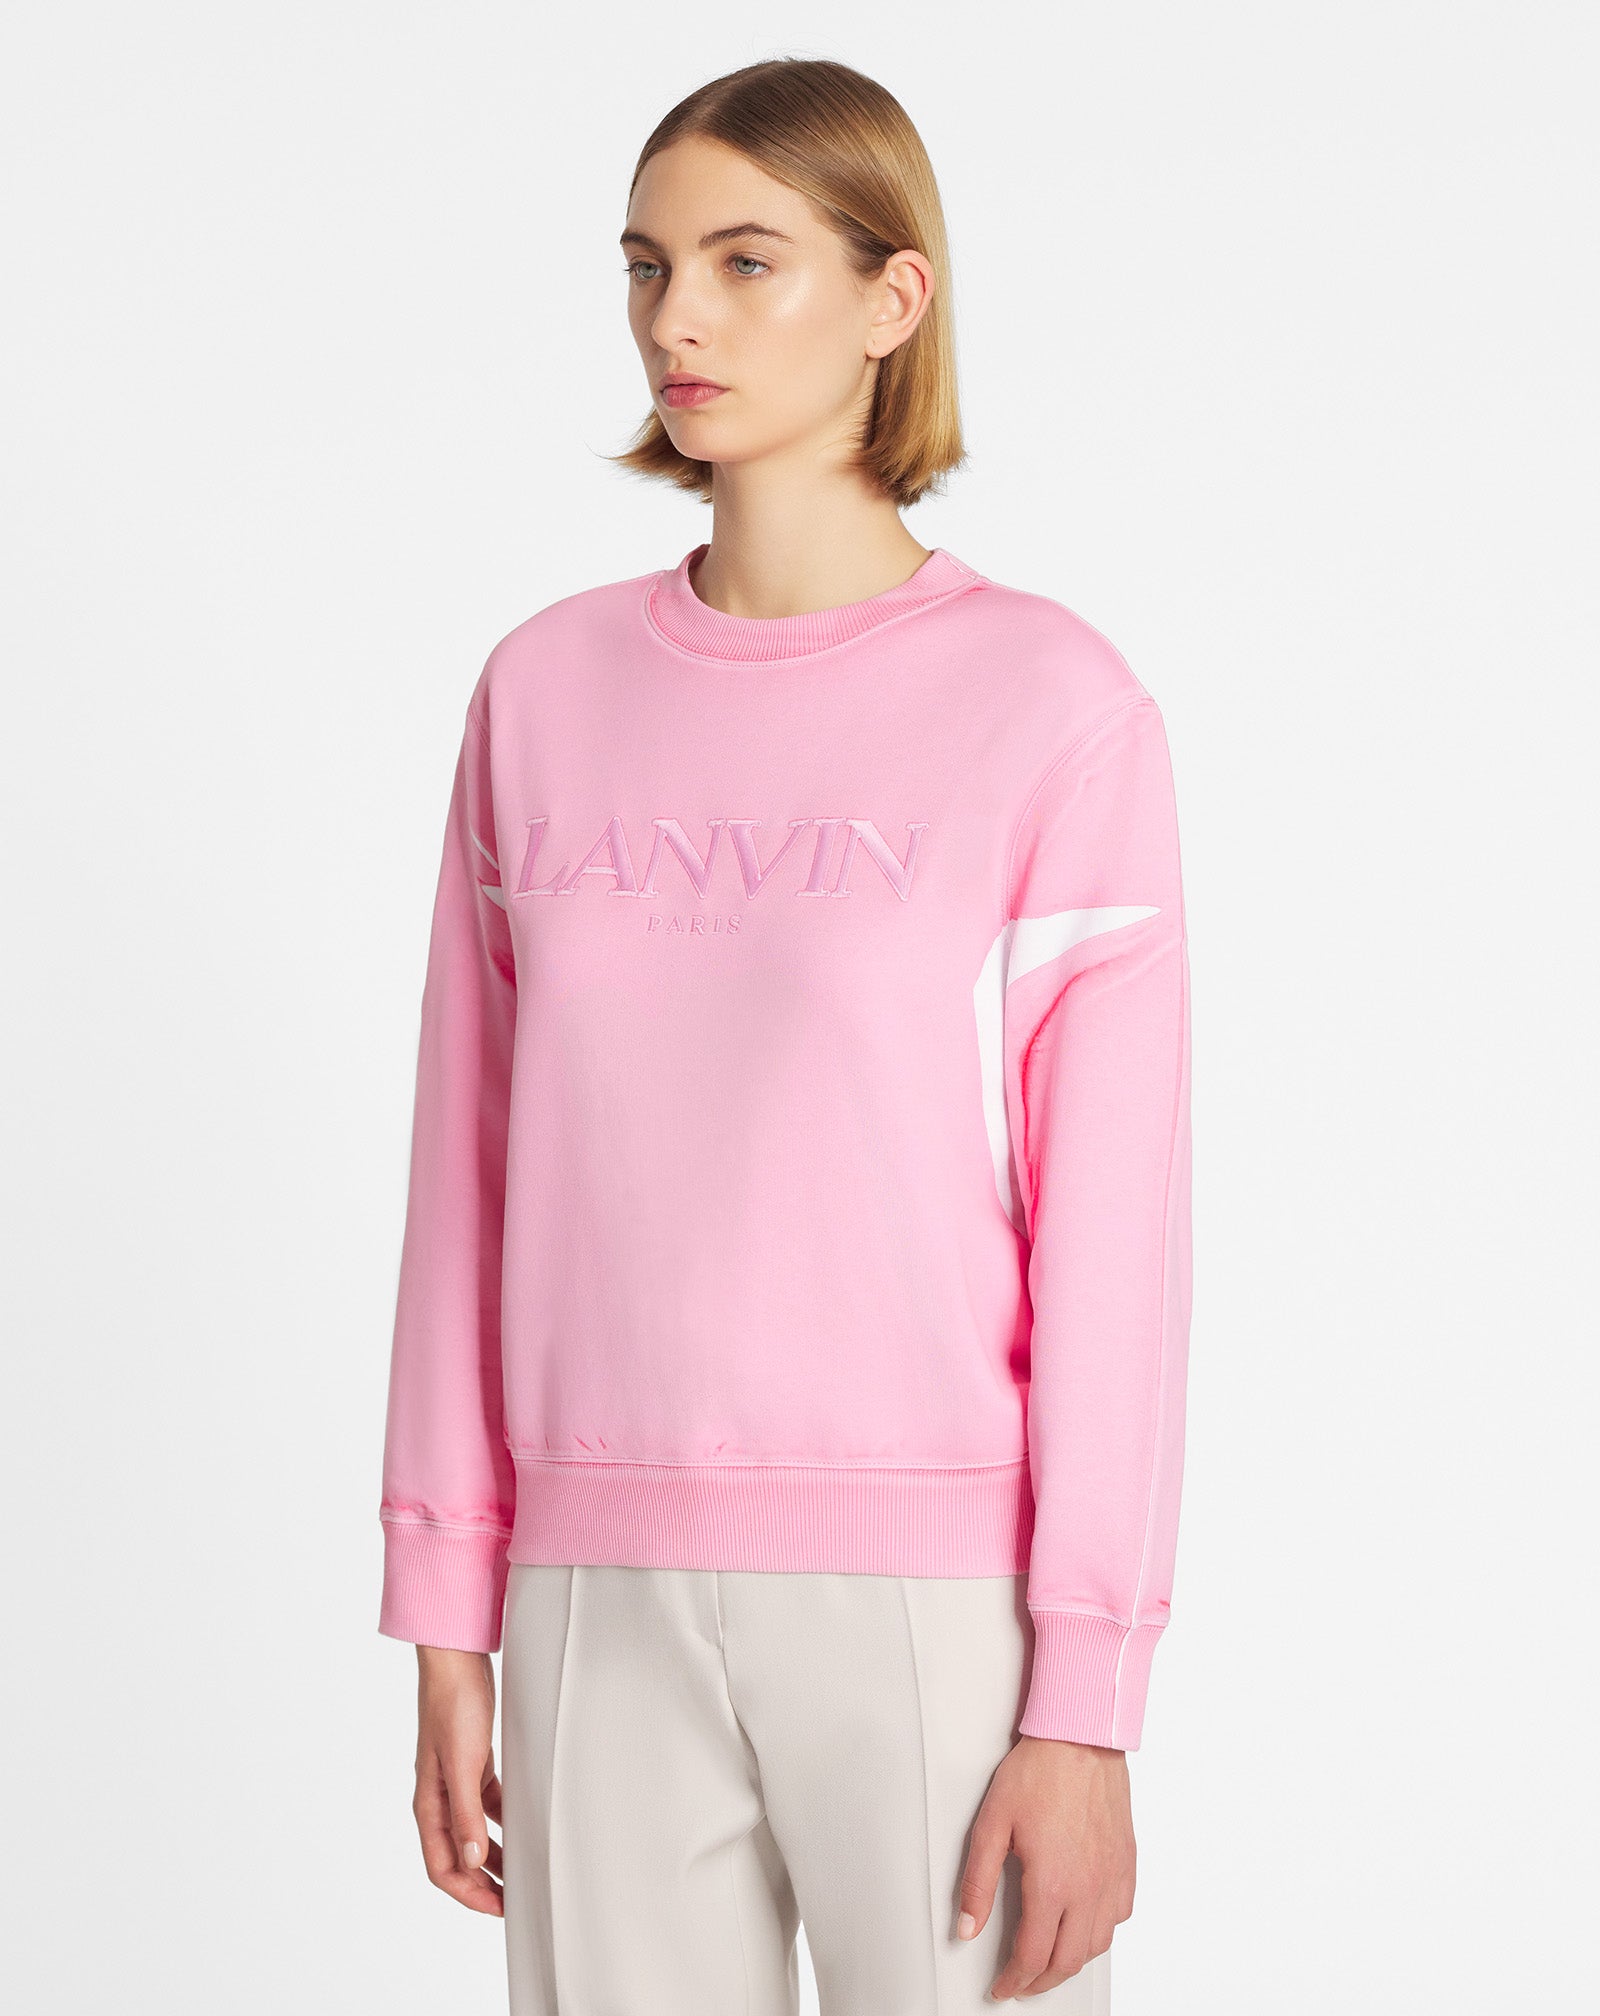 Overprinted embroidered lanvin paris sweatshirt